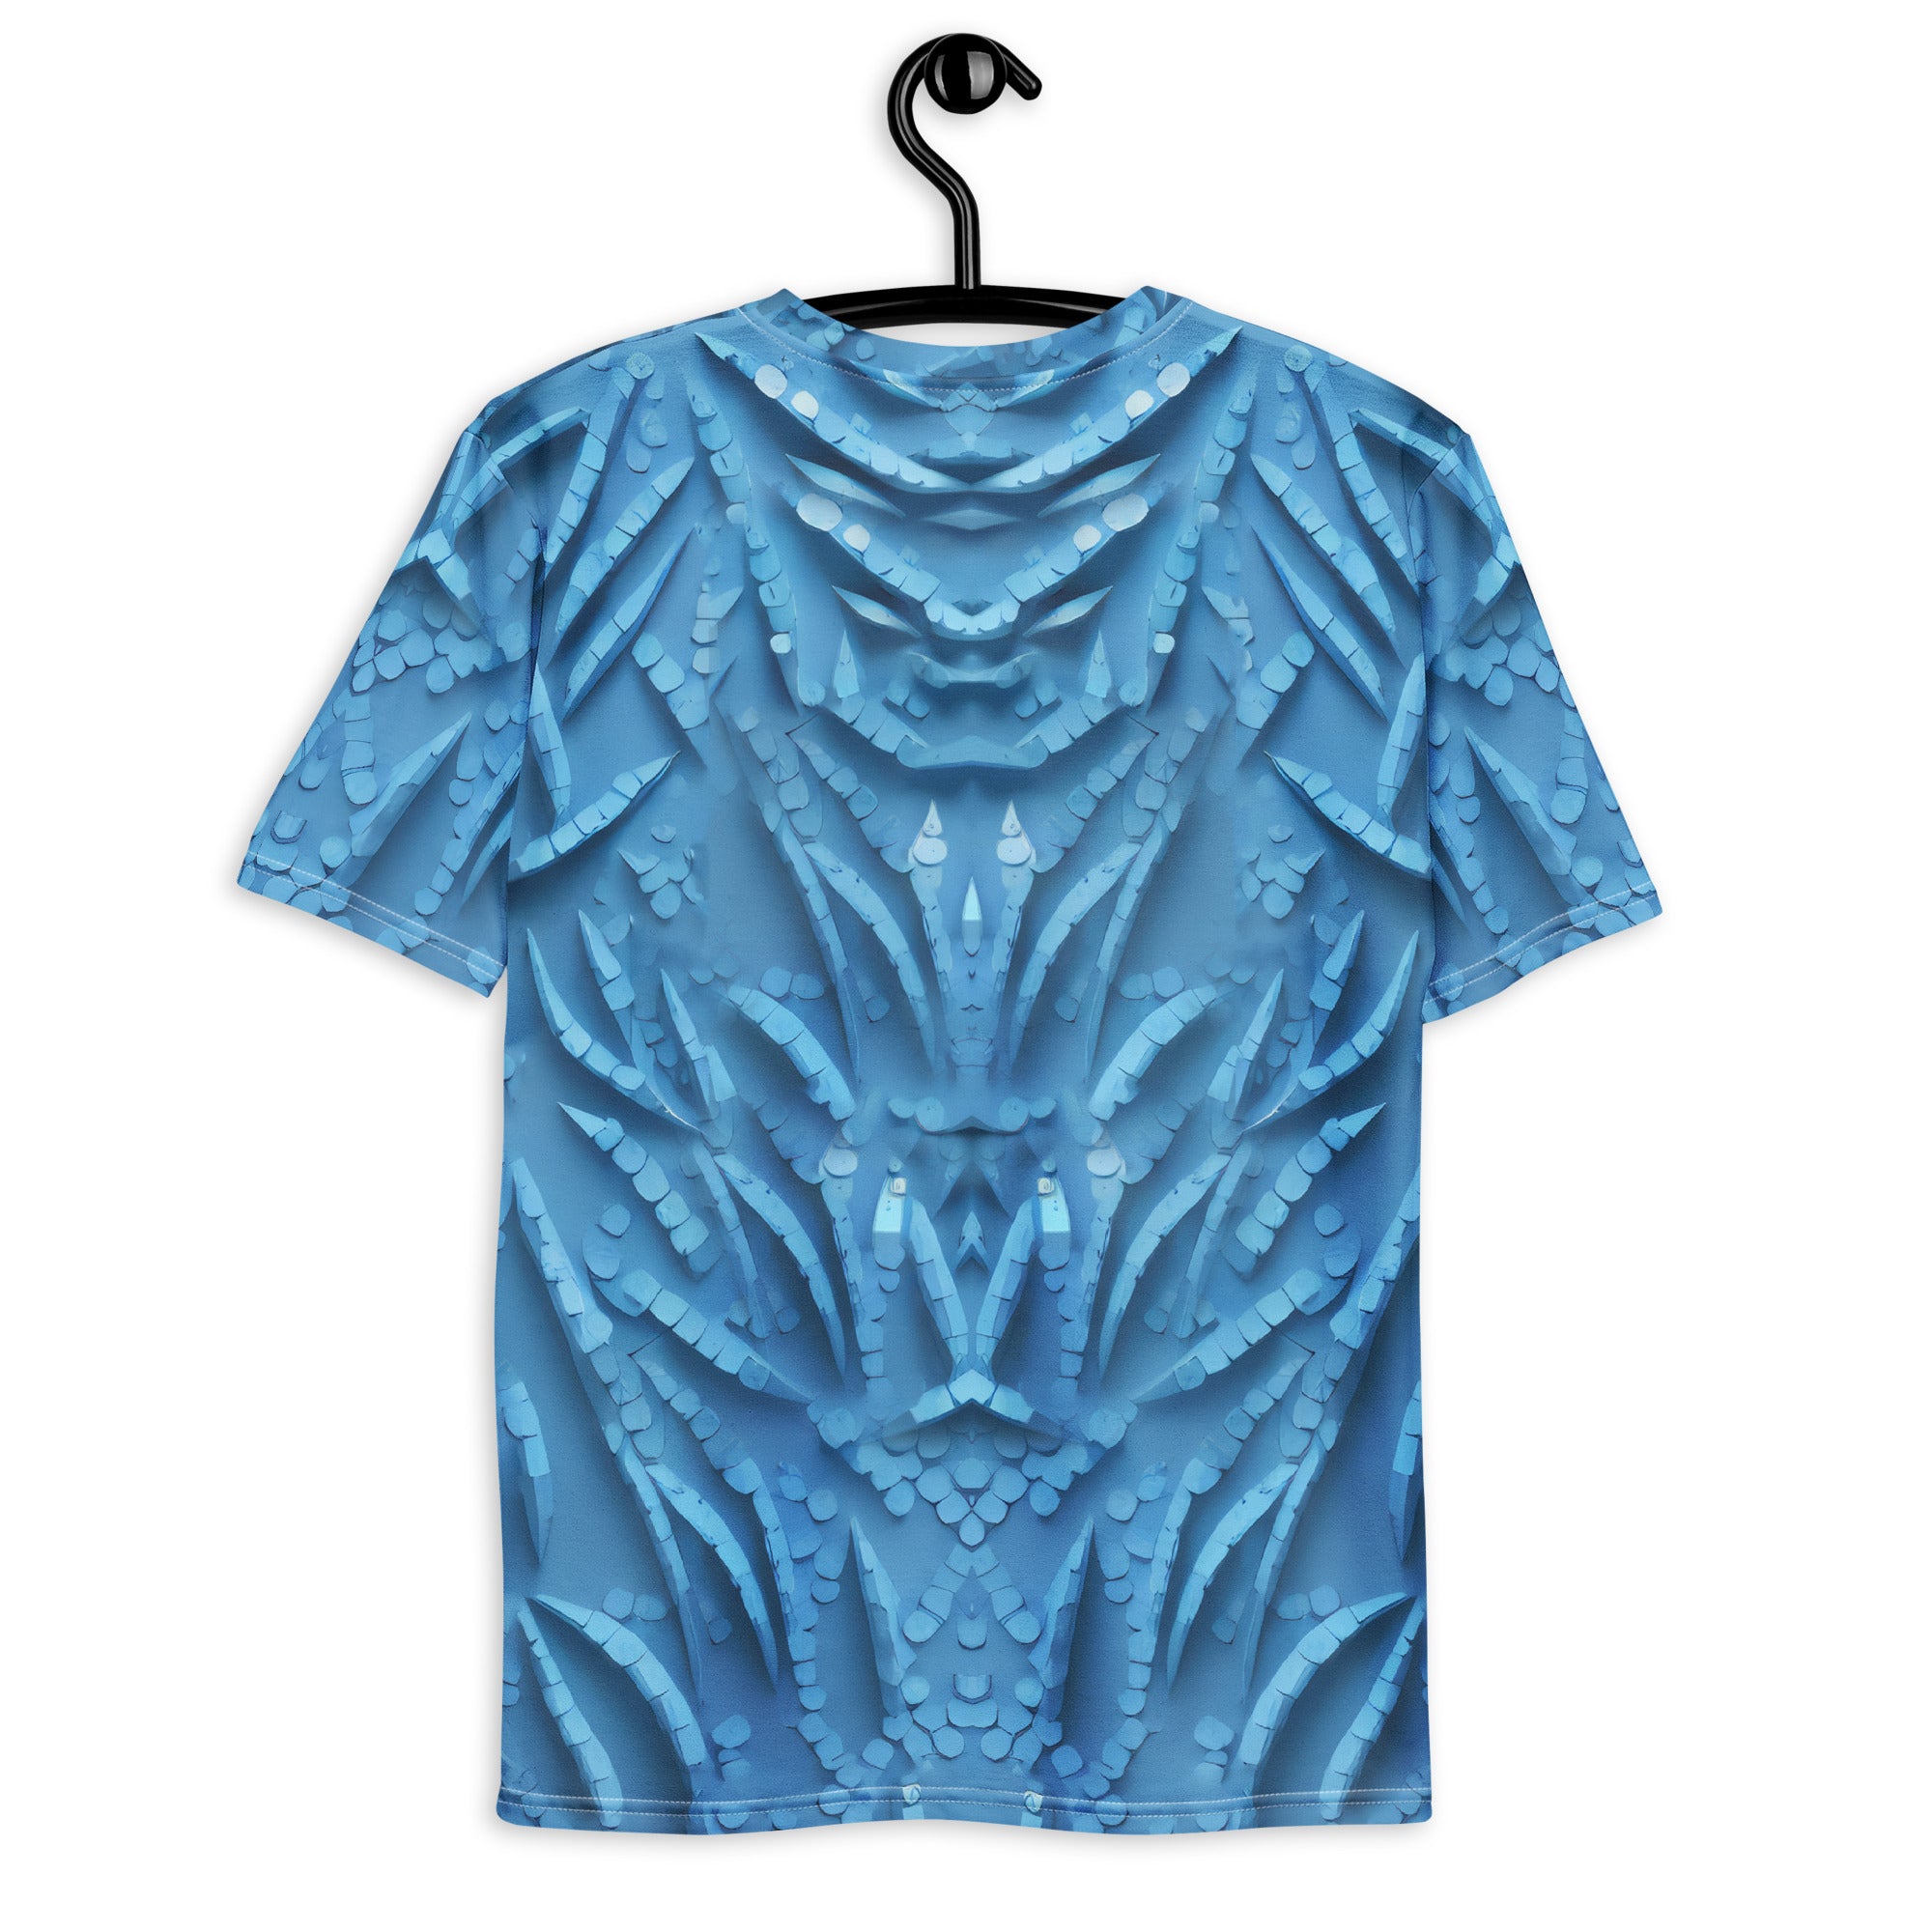 Trendy abstract wave kirigram t-shirt for men.